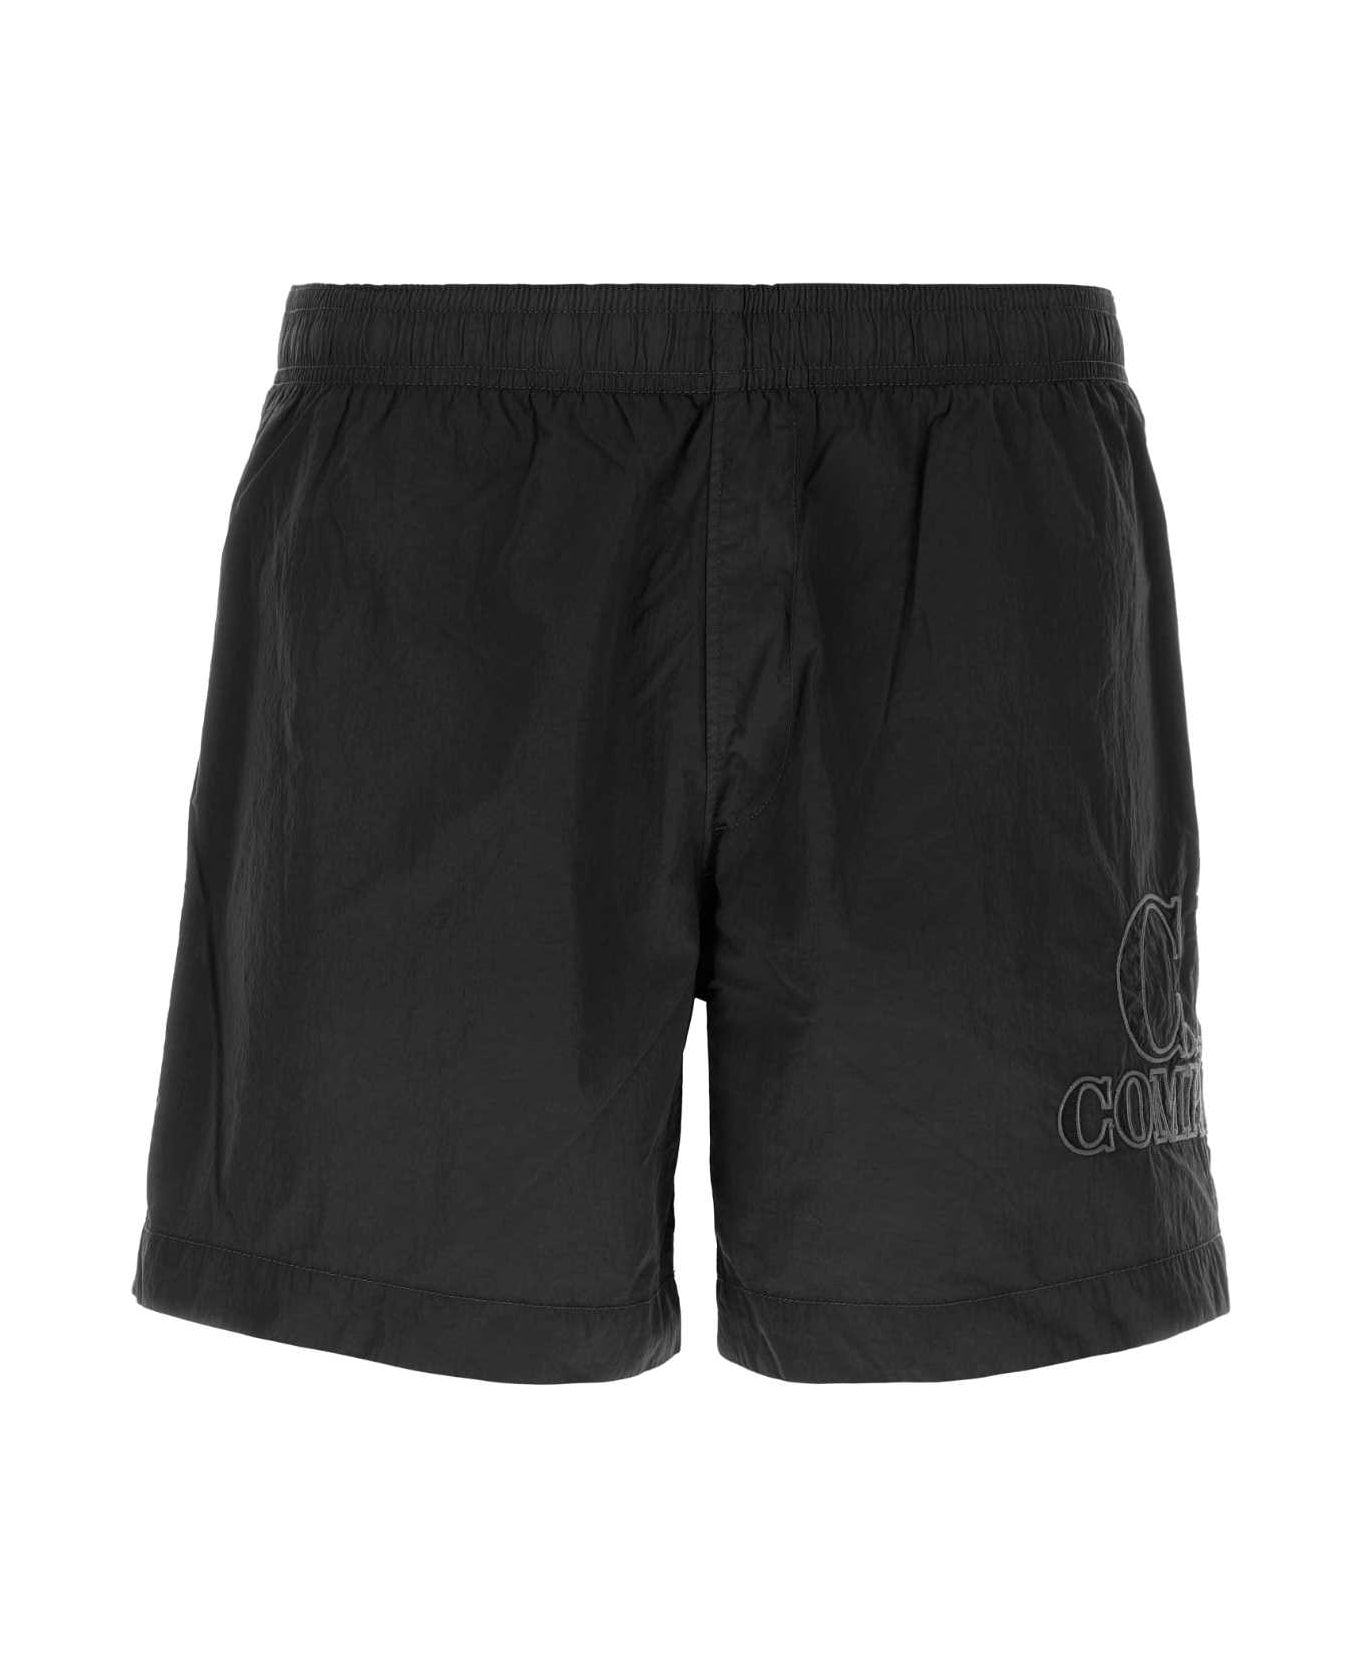 C.P. Company Black Nylon Swimming Shorts - Black 水着